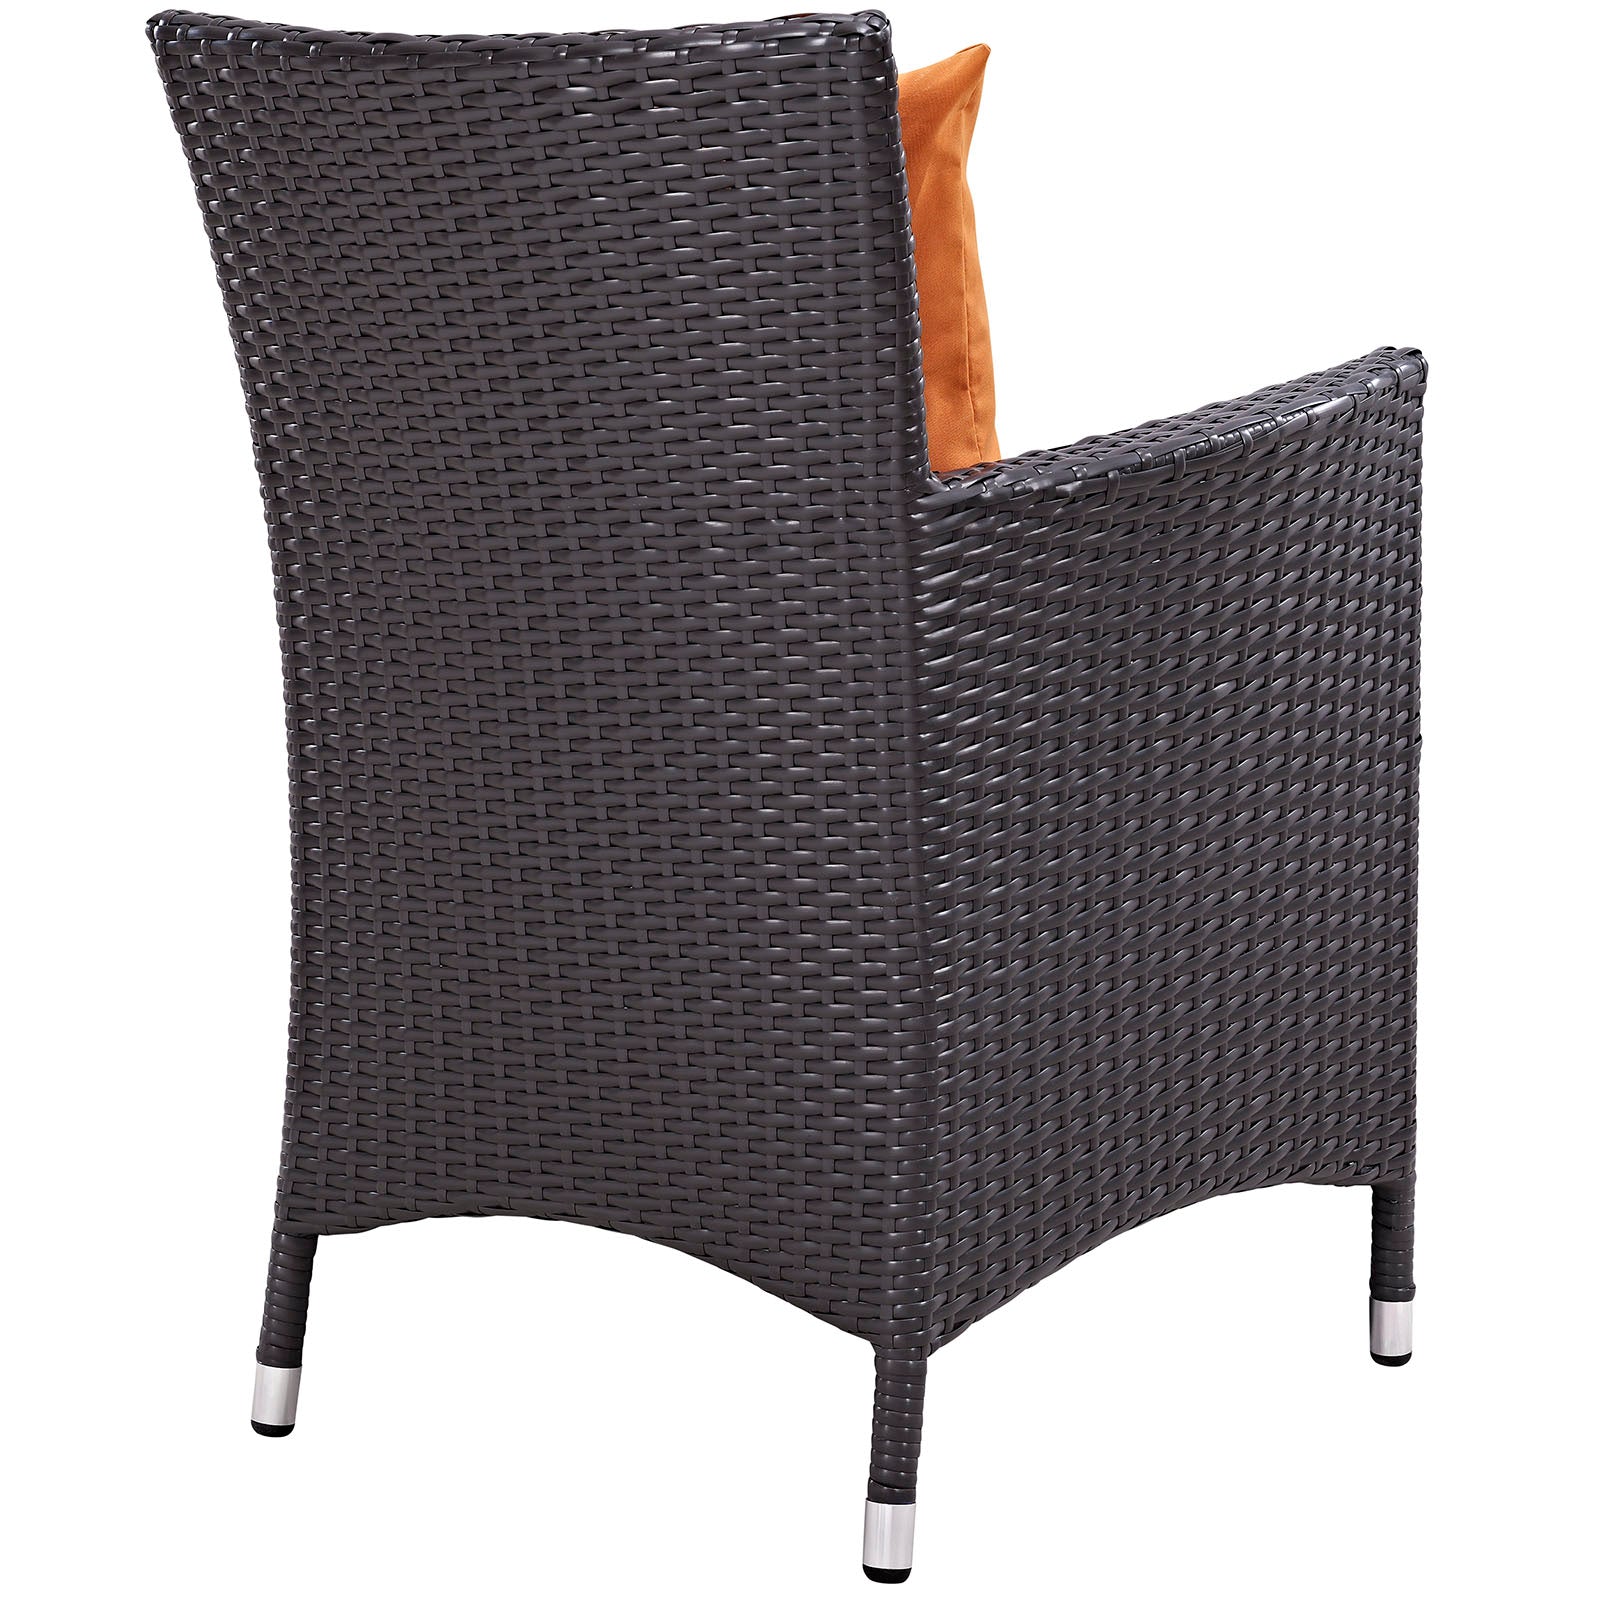 Modway Outdoor Dining Chairs - Convene Dining Outdoor Patio Armchair Espresso Orange